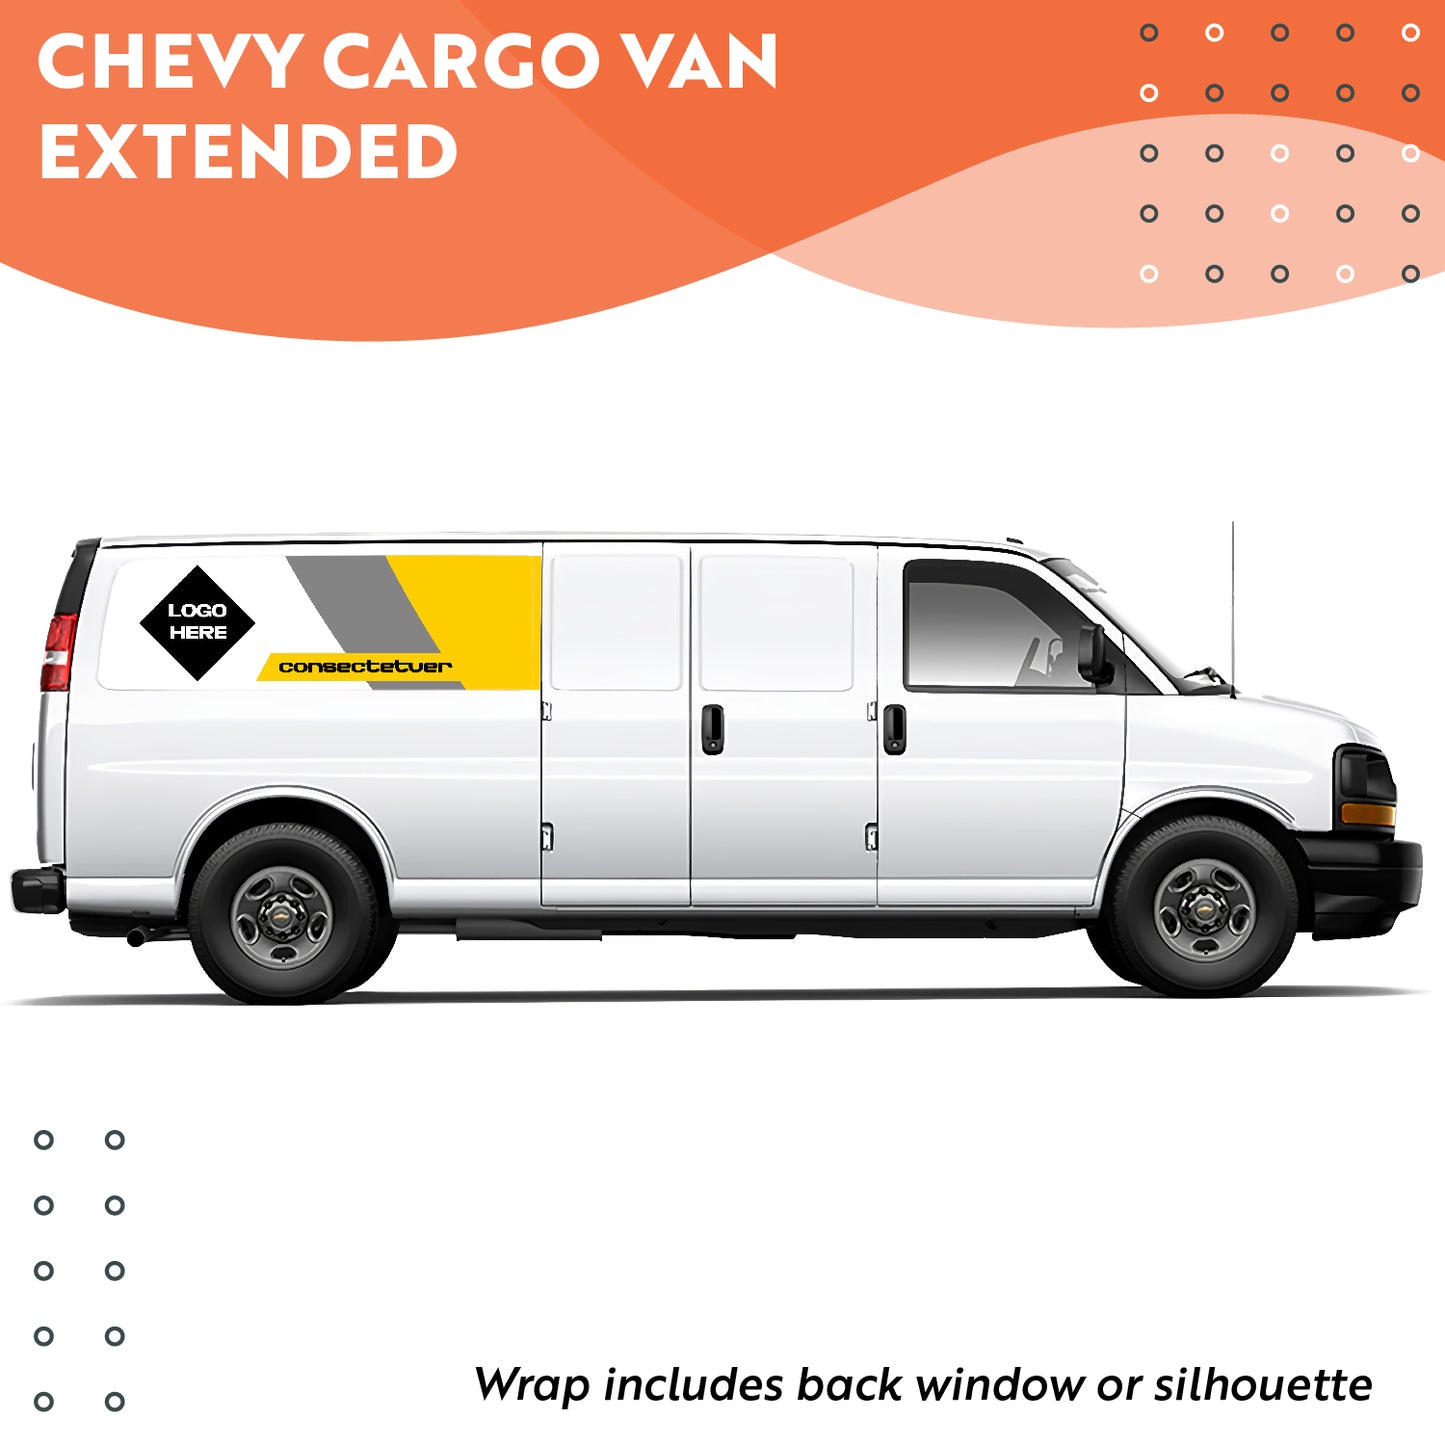 Chevy Cargo Van Extended (GMC/CHEVROLET)